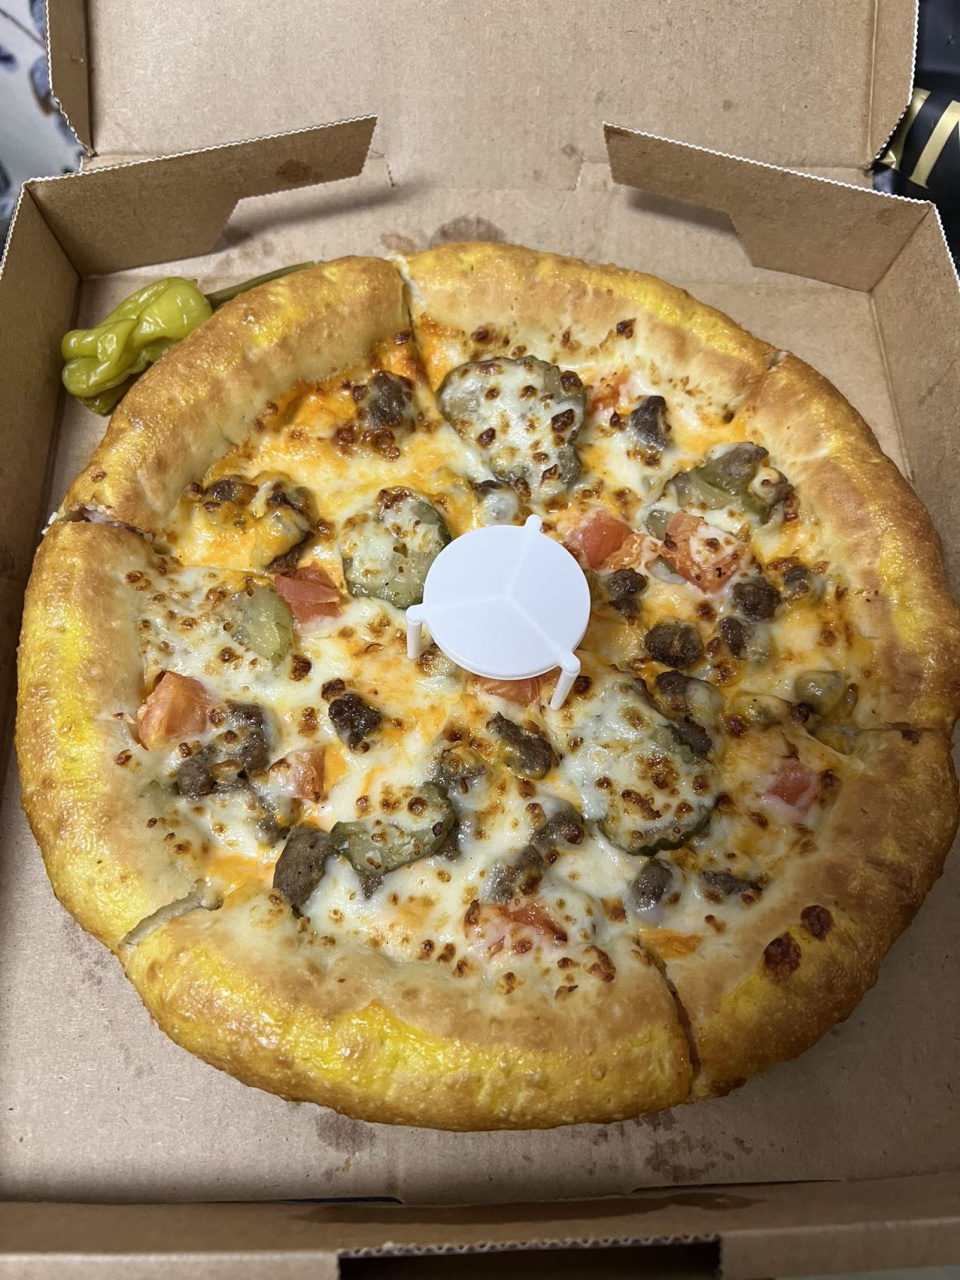 9寸12寸披萨对比图片